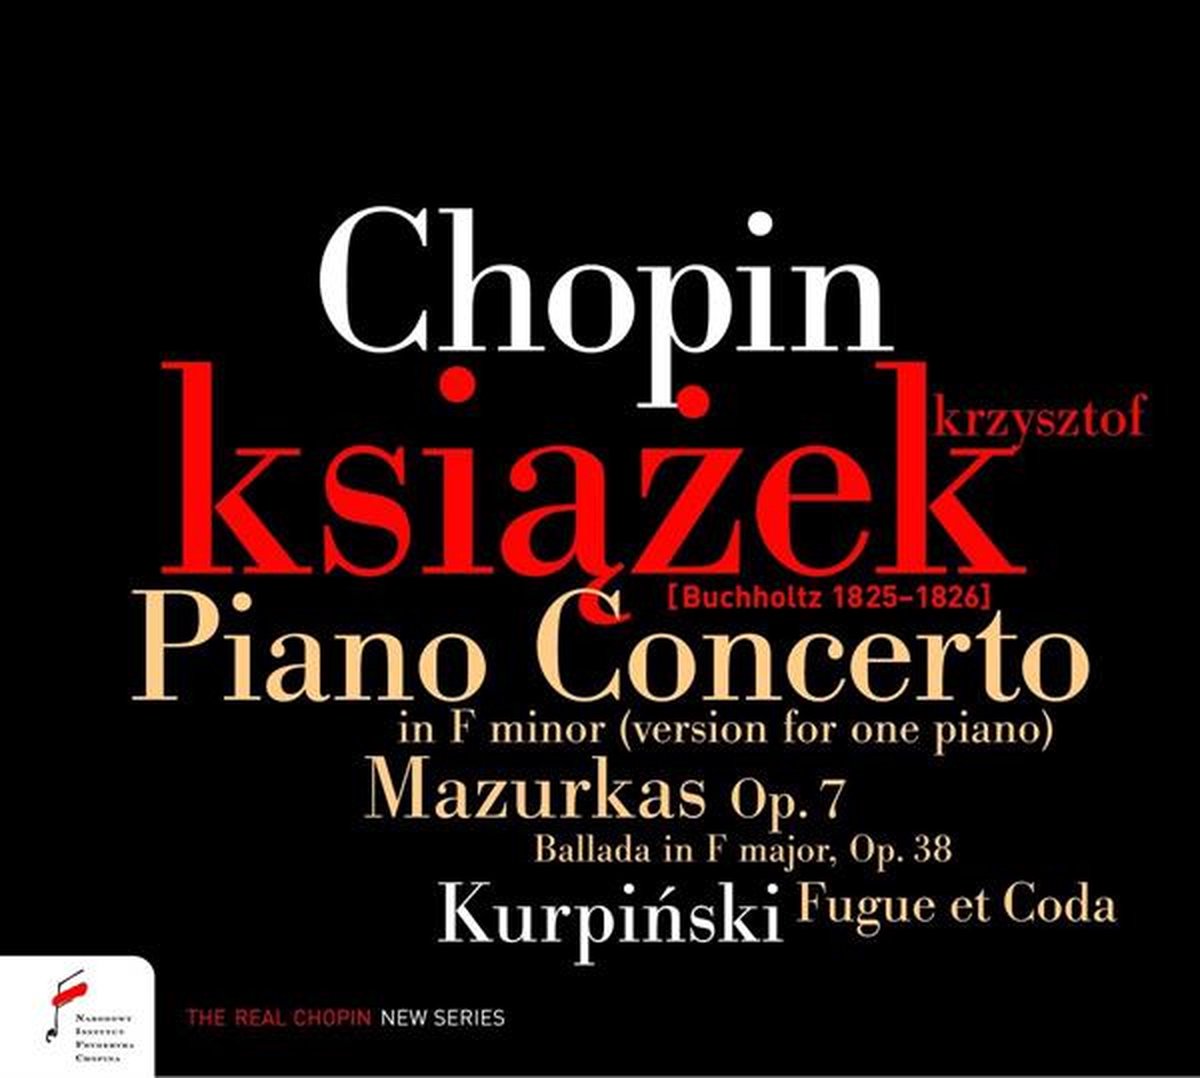 Chopin: Piano Concerto In F Minor. 4 Mazurkas. Ballade / Kurpinsky: Fugue Et Coda - Frederic Chopin